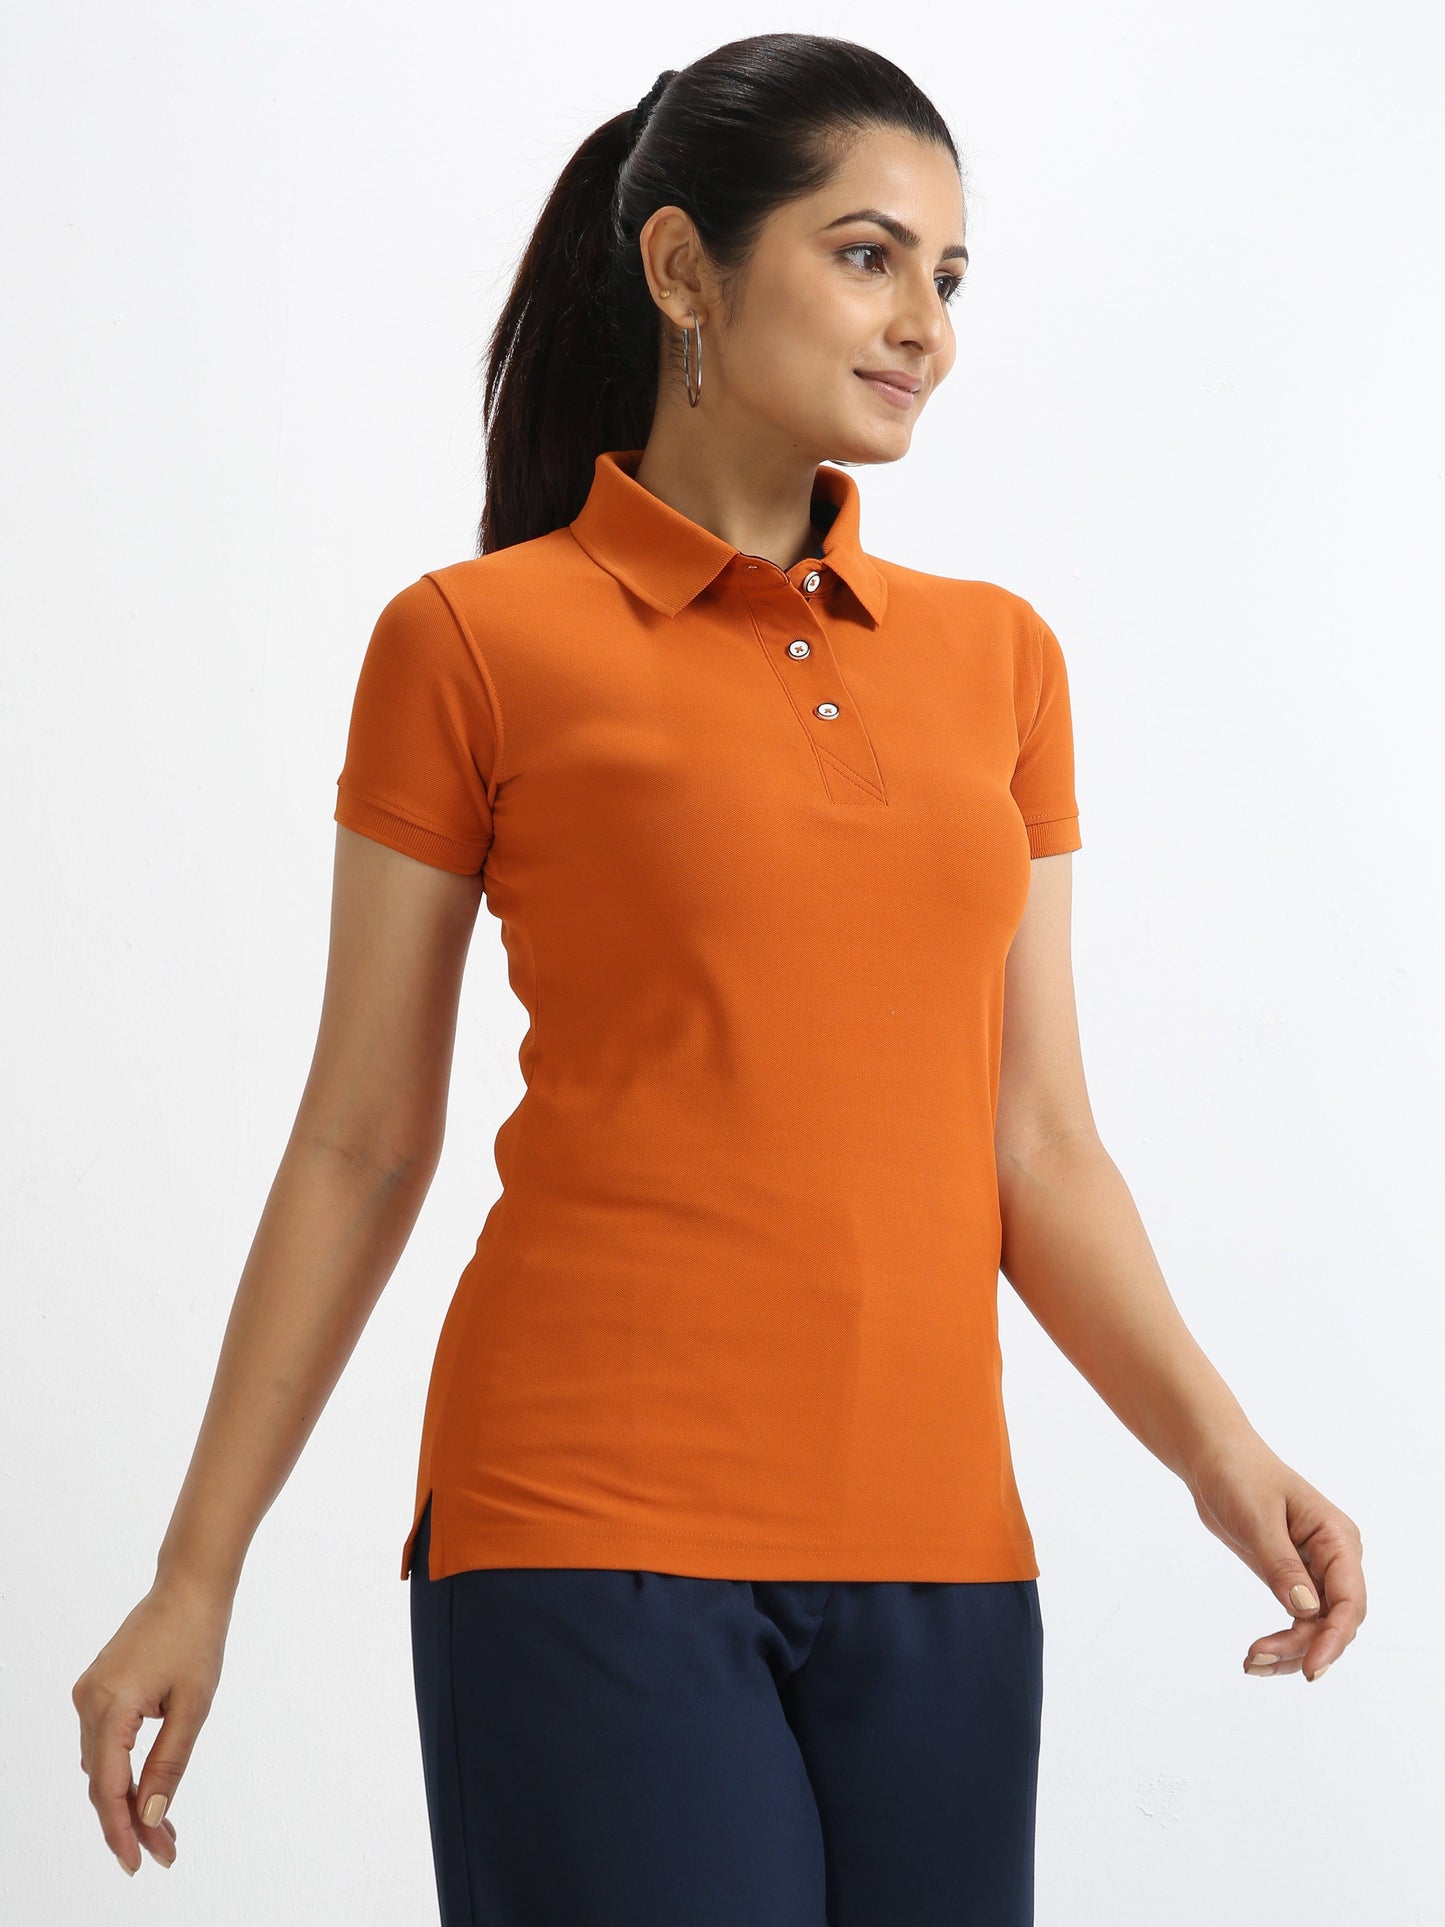 Woody Orange Women's Polo T-shirt